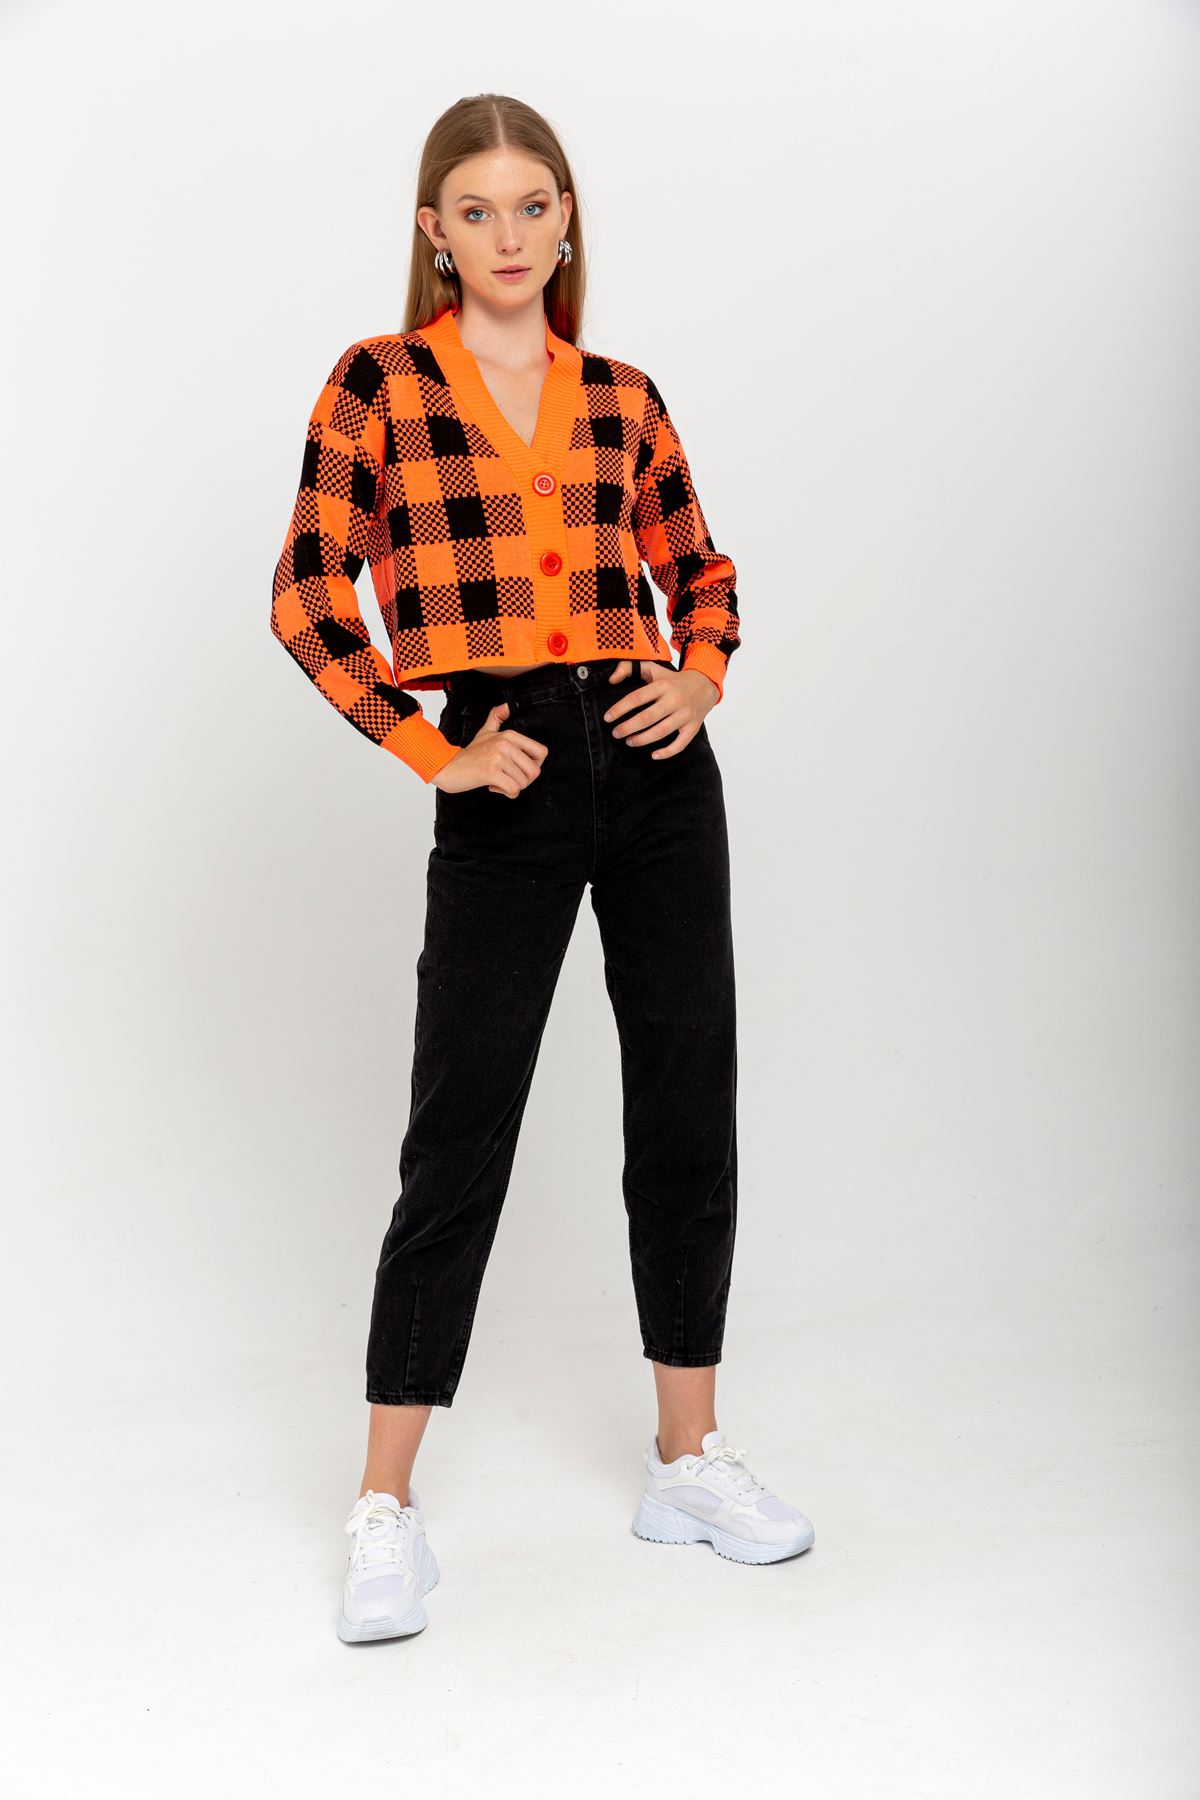 Knitwear Fabric Long Sleeve V-Neck Crop Square Print Women Cardigan - Orange